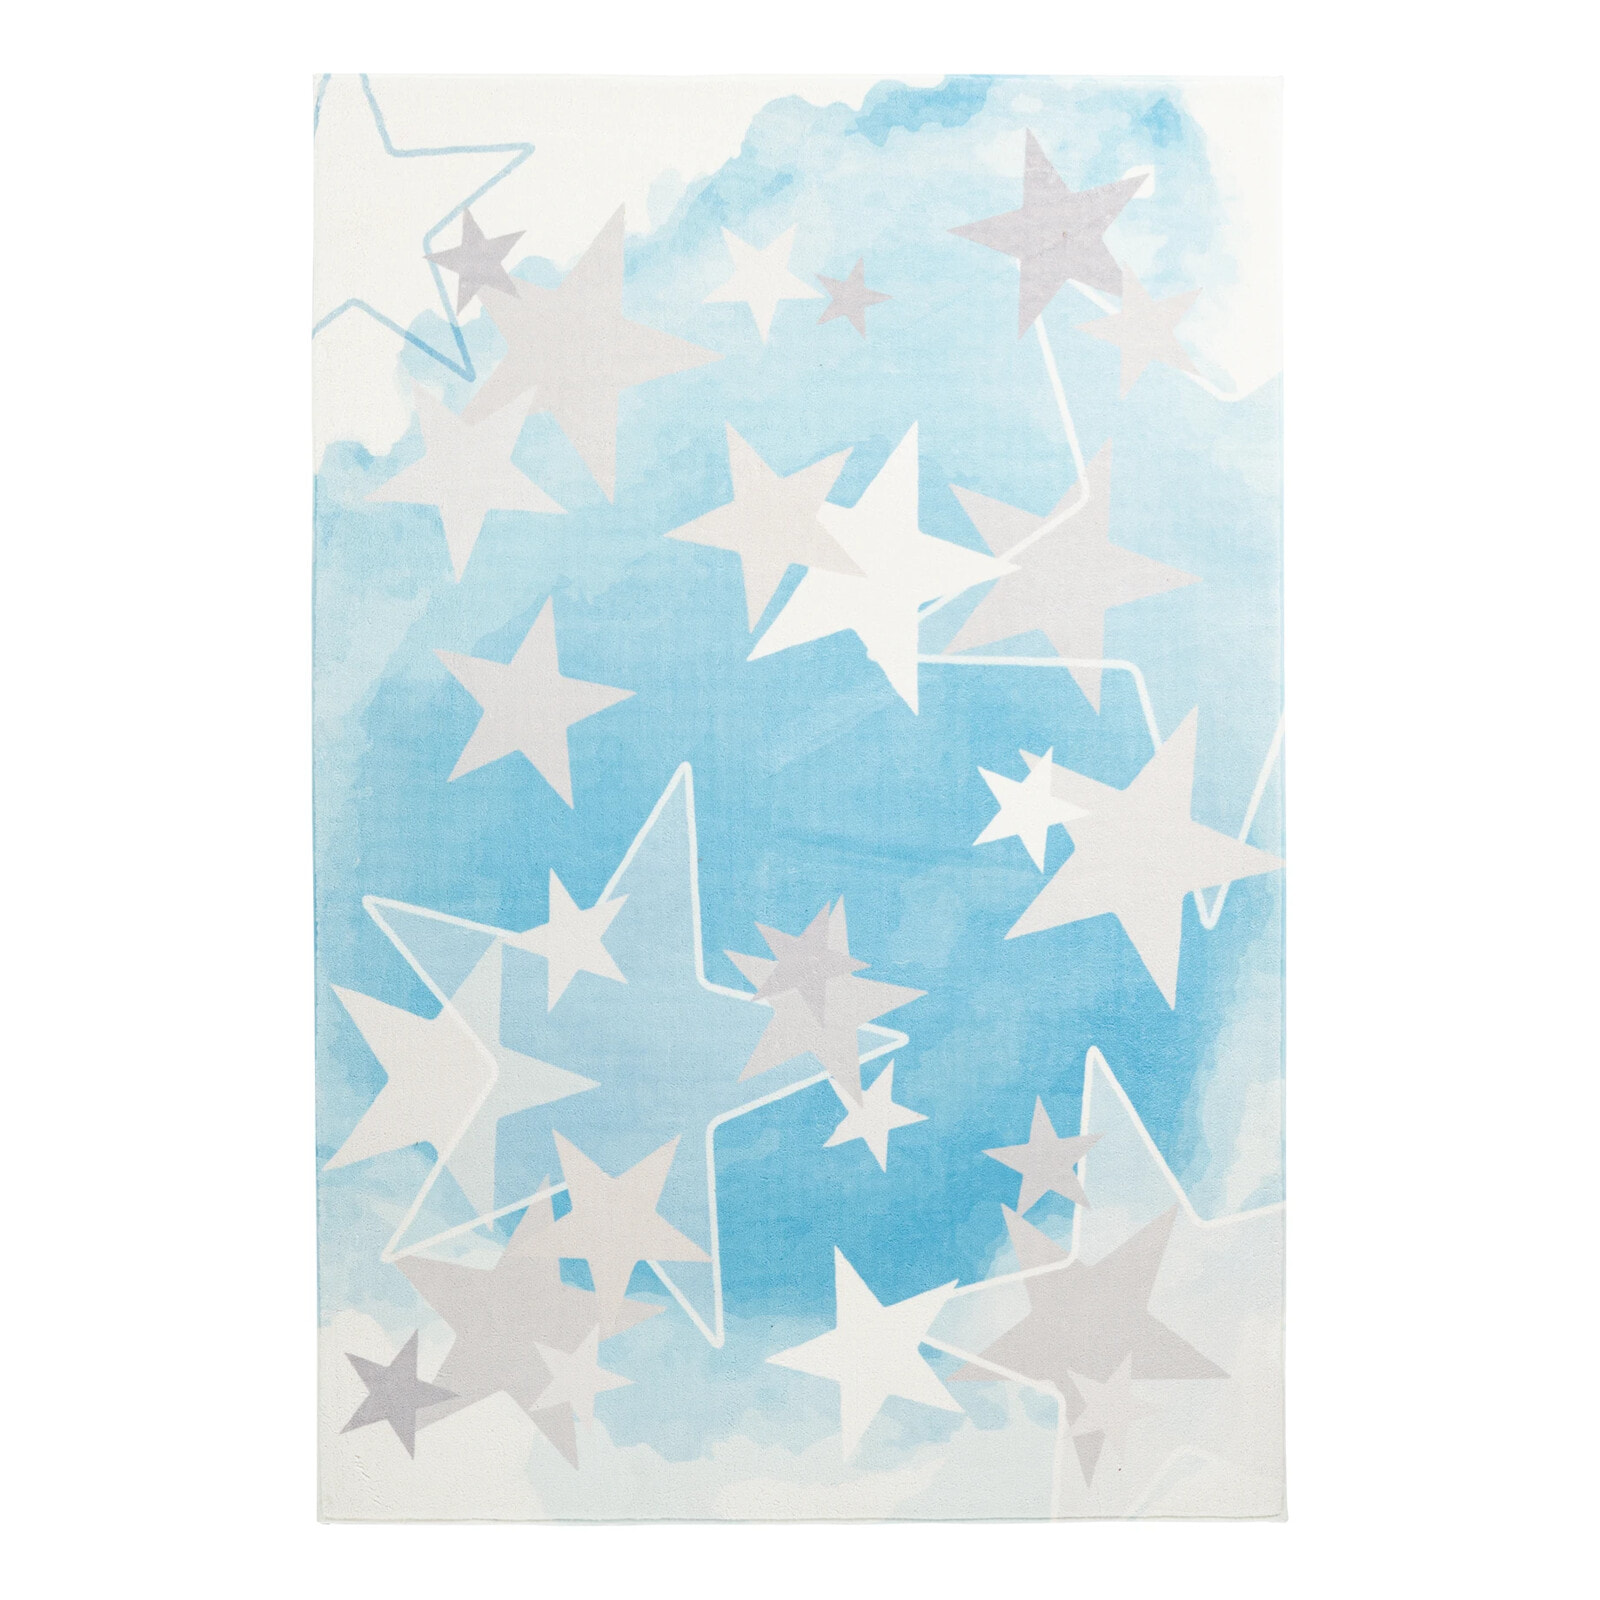 Детский ковер Obsession с принтом звезд, 120 x 170 cm